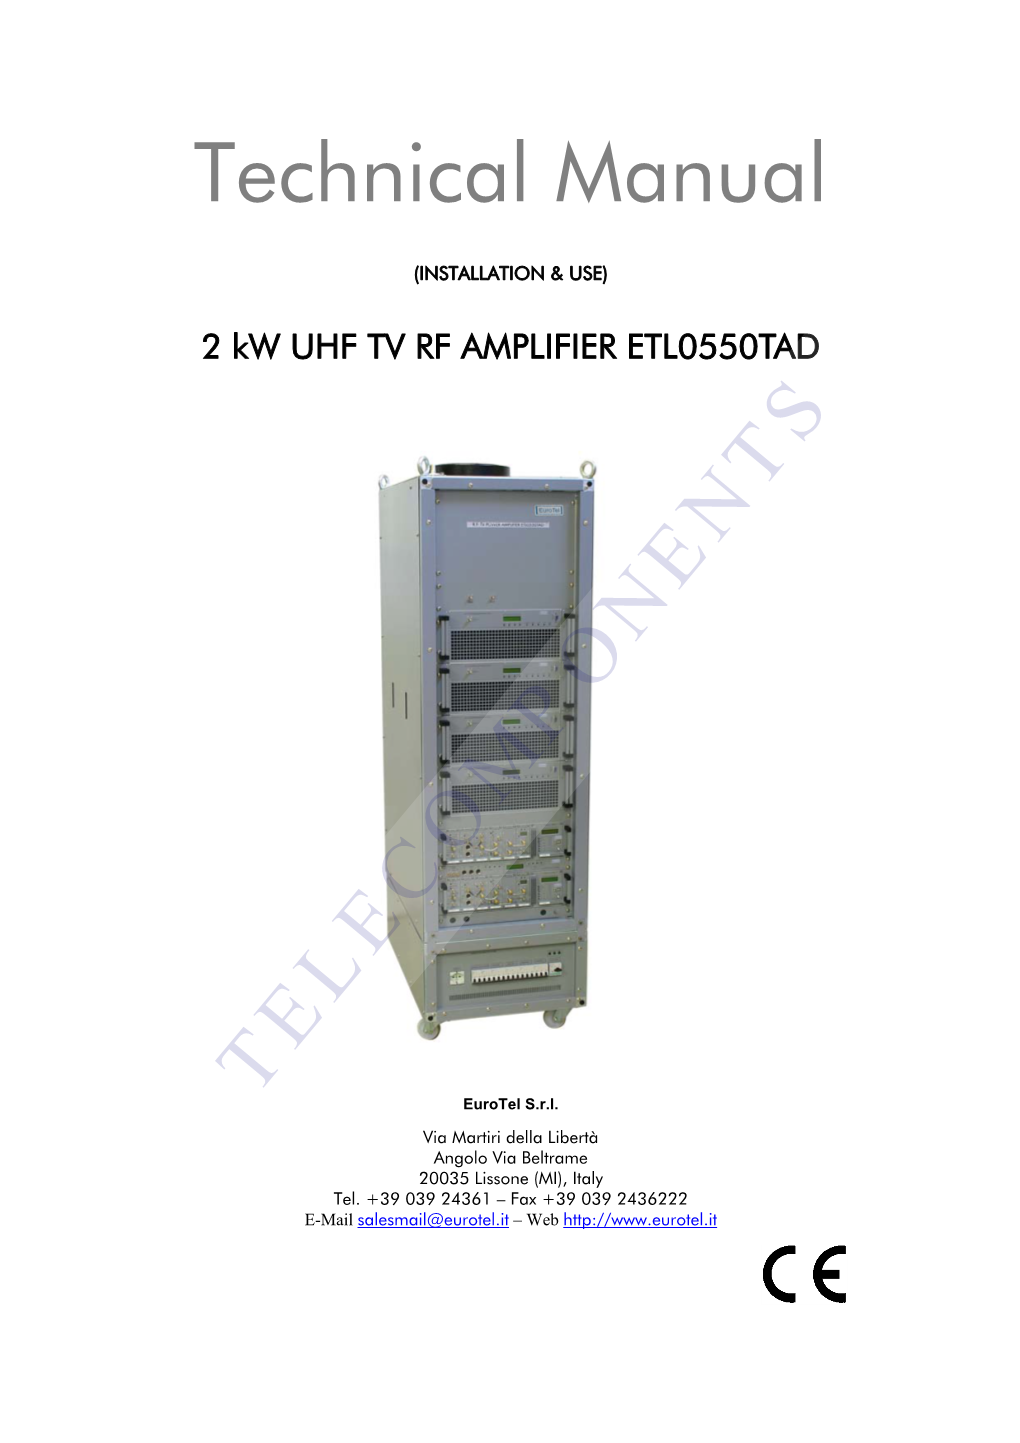 2 Kw UHF TV RF AMPLIFIER ETL0550TAD